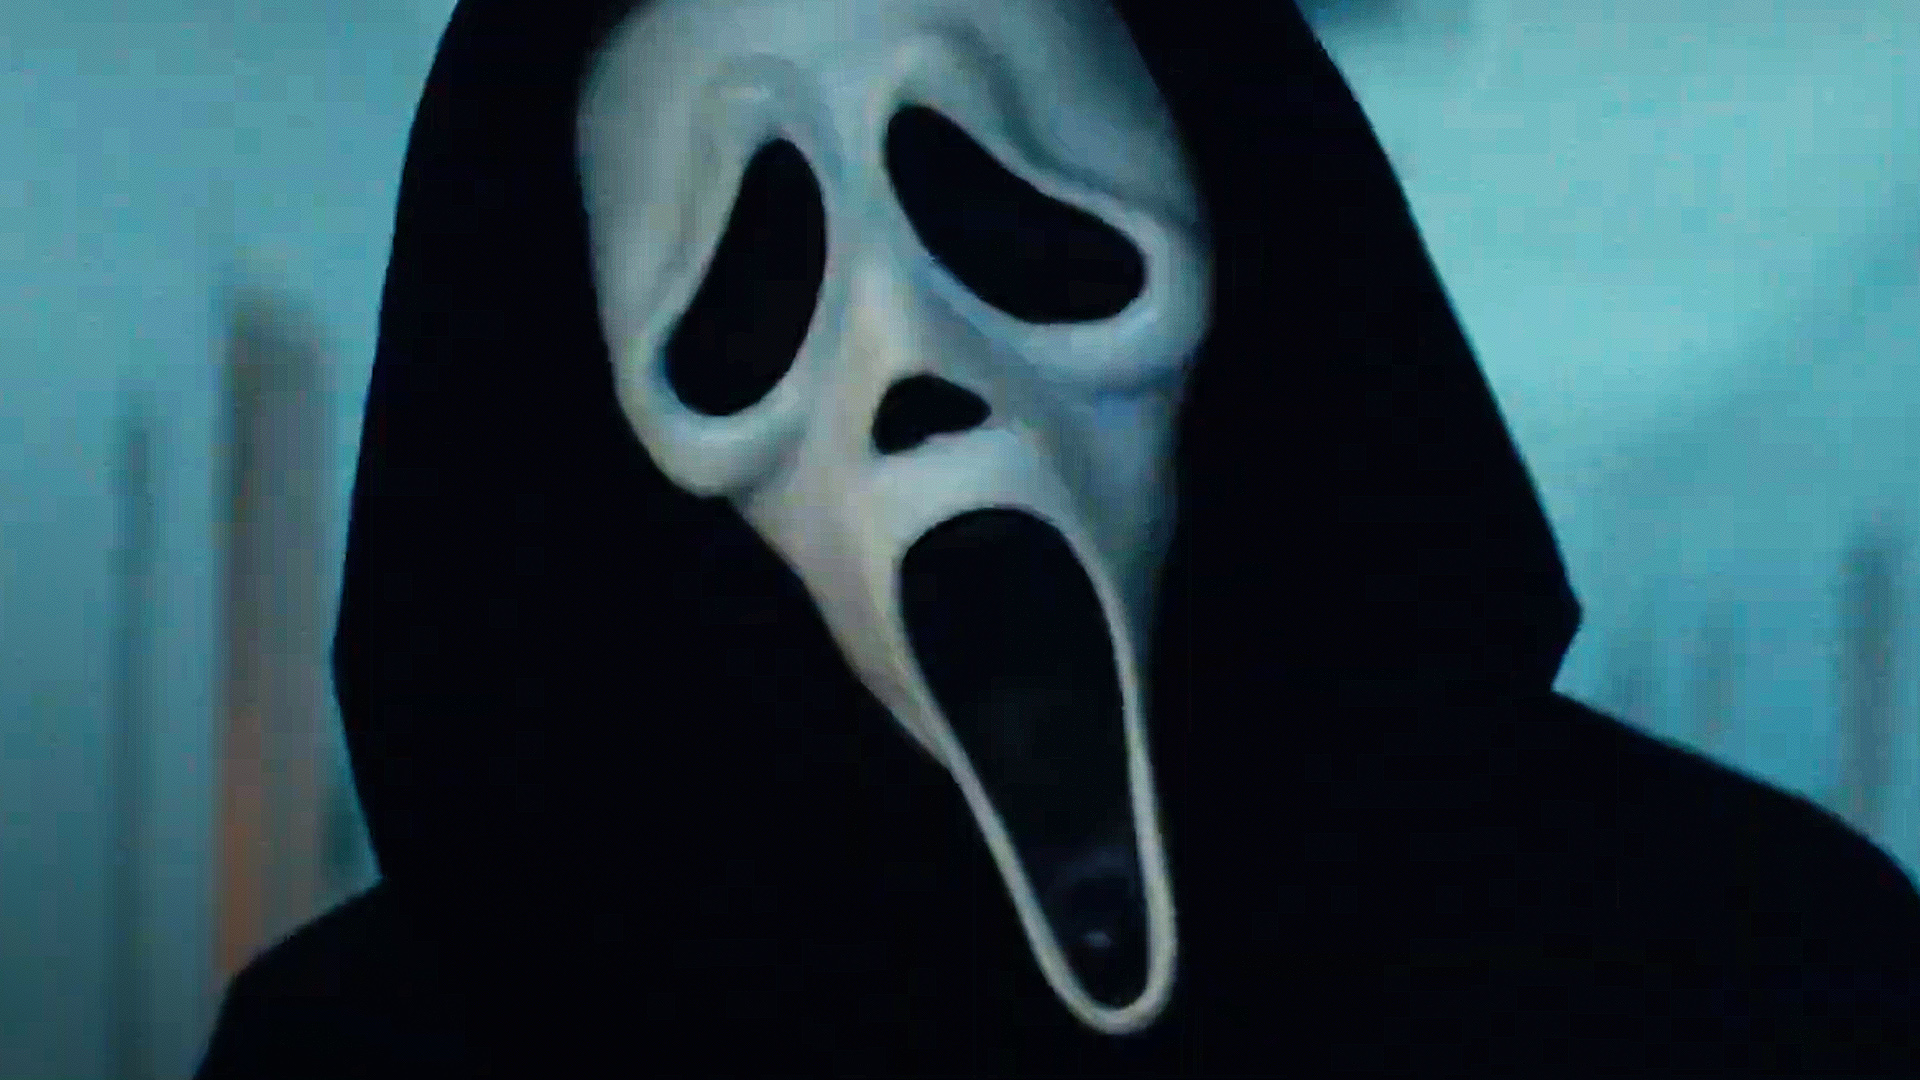 Scream VI officially certified fresh! : r/Scream